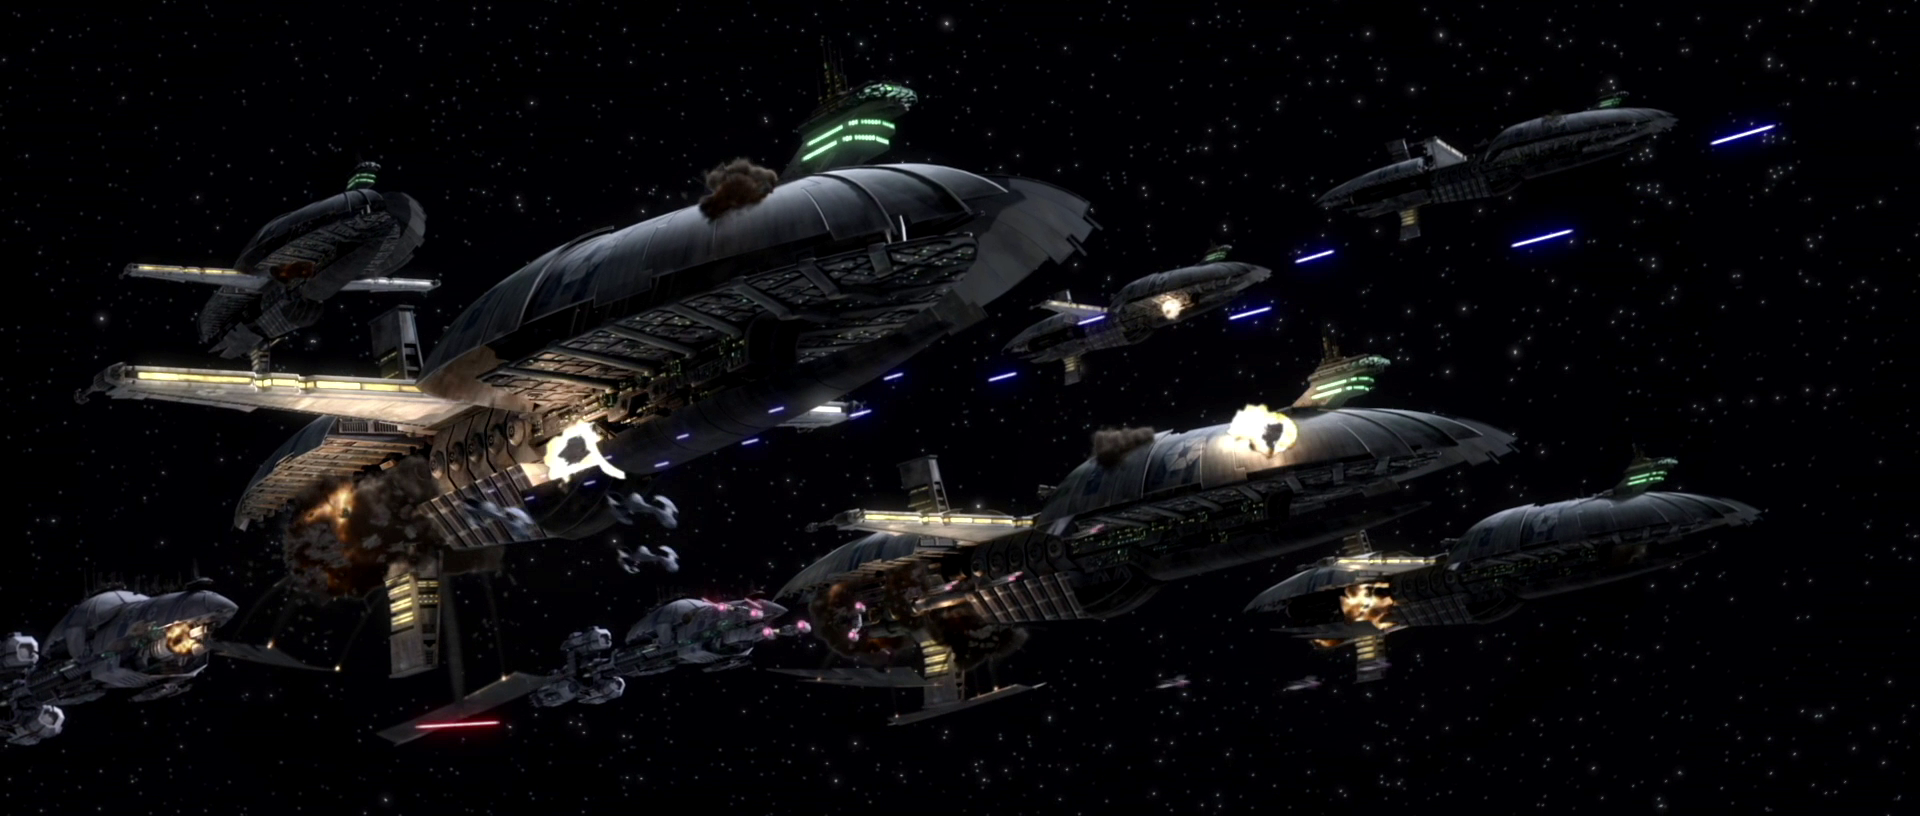 separatist star wars ships